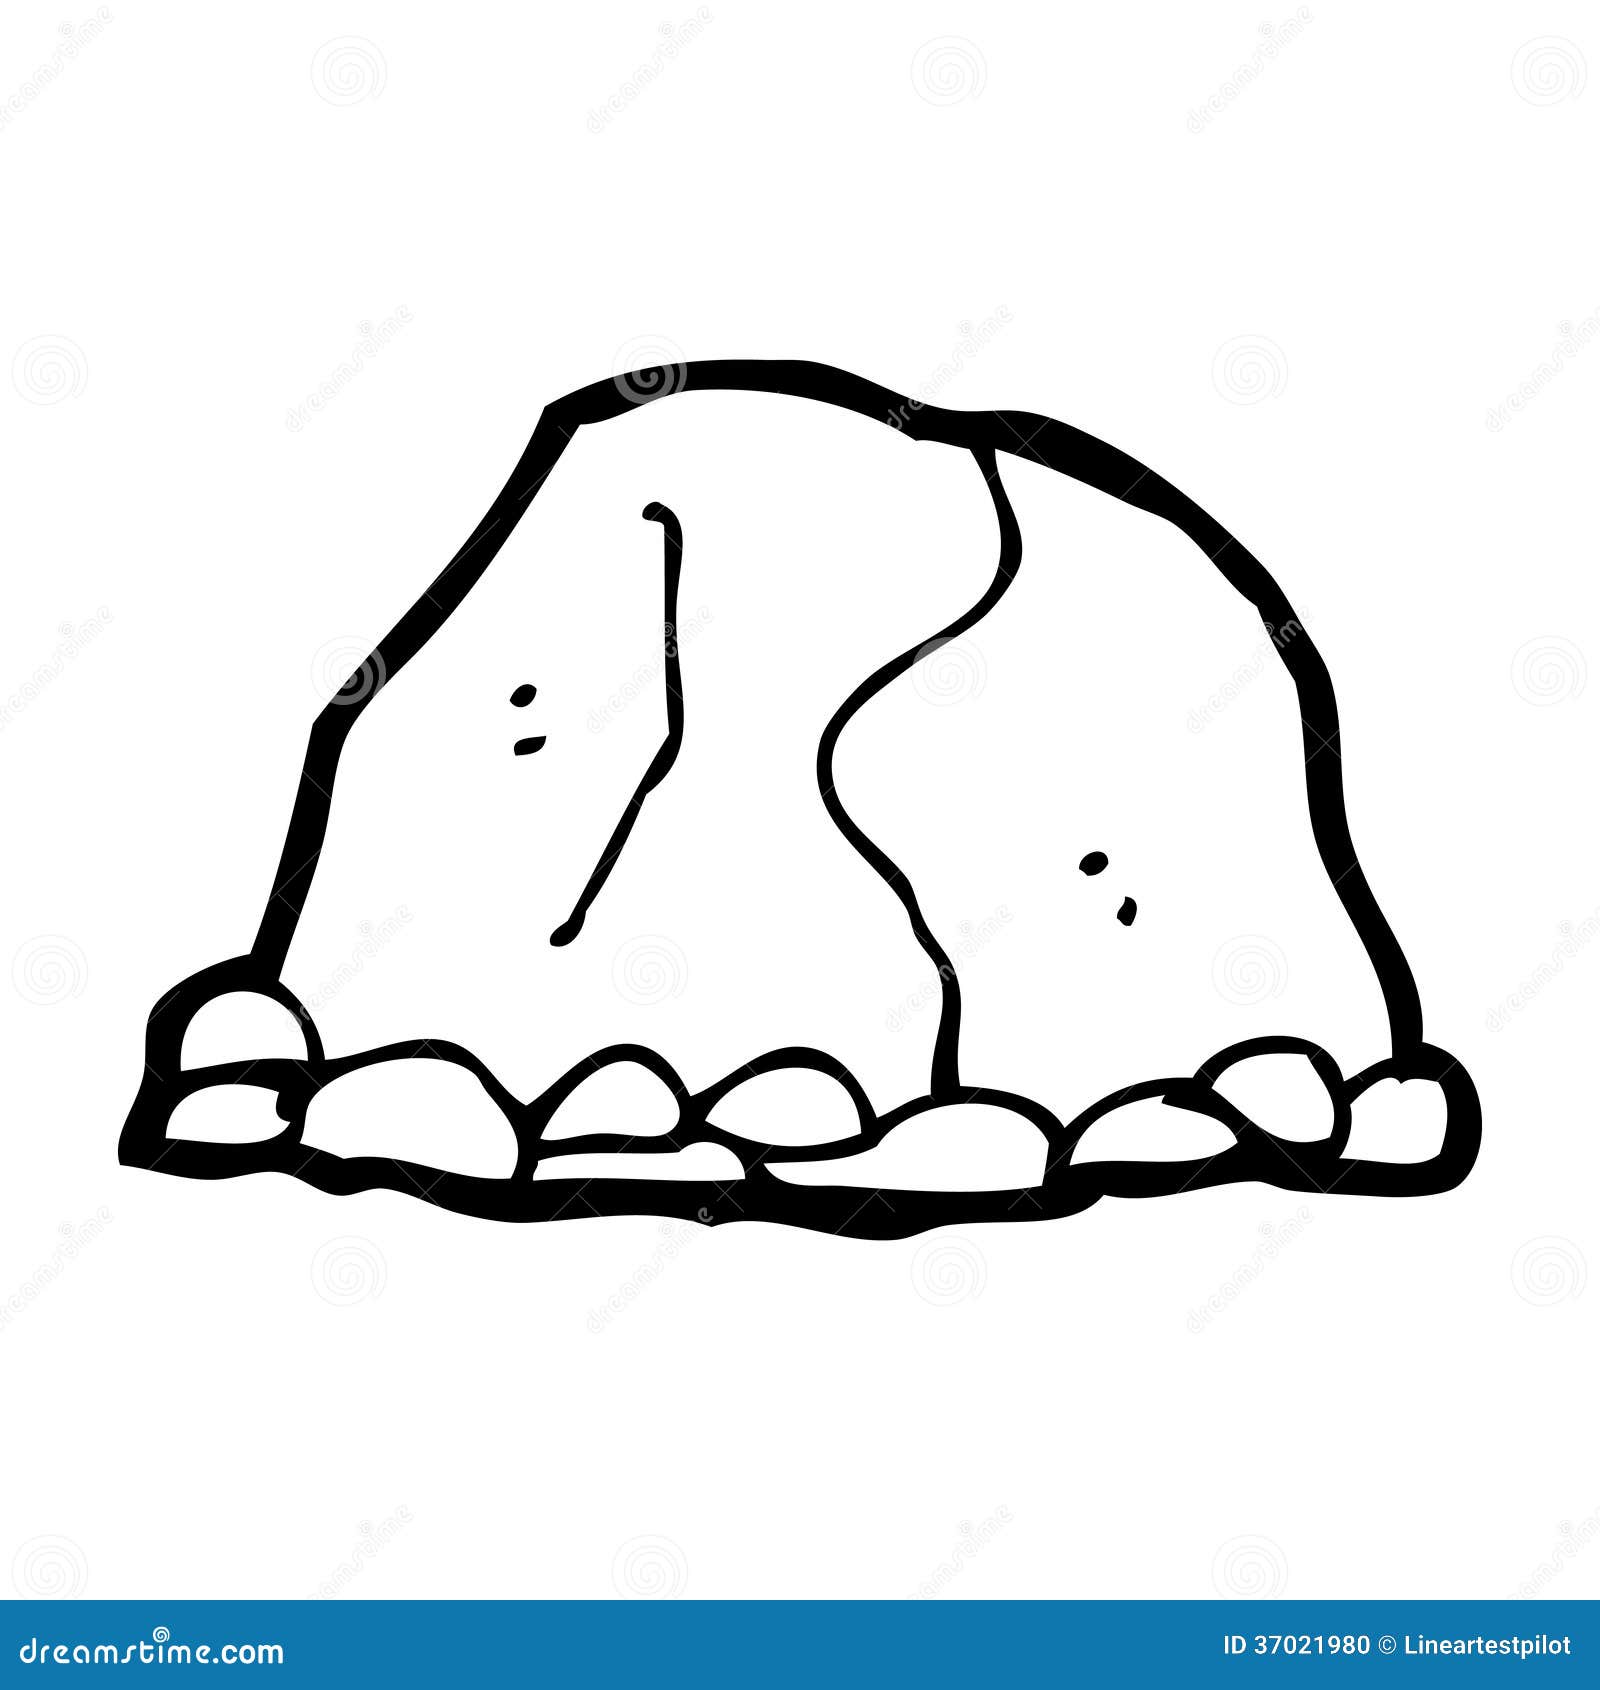 Cartoon large rock stock illustration. Illustration of silly - 37021980